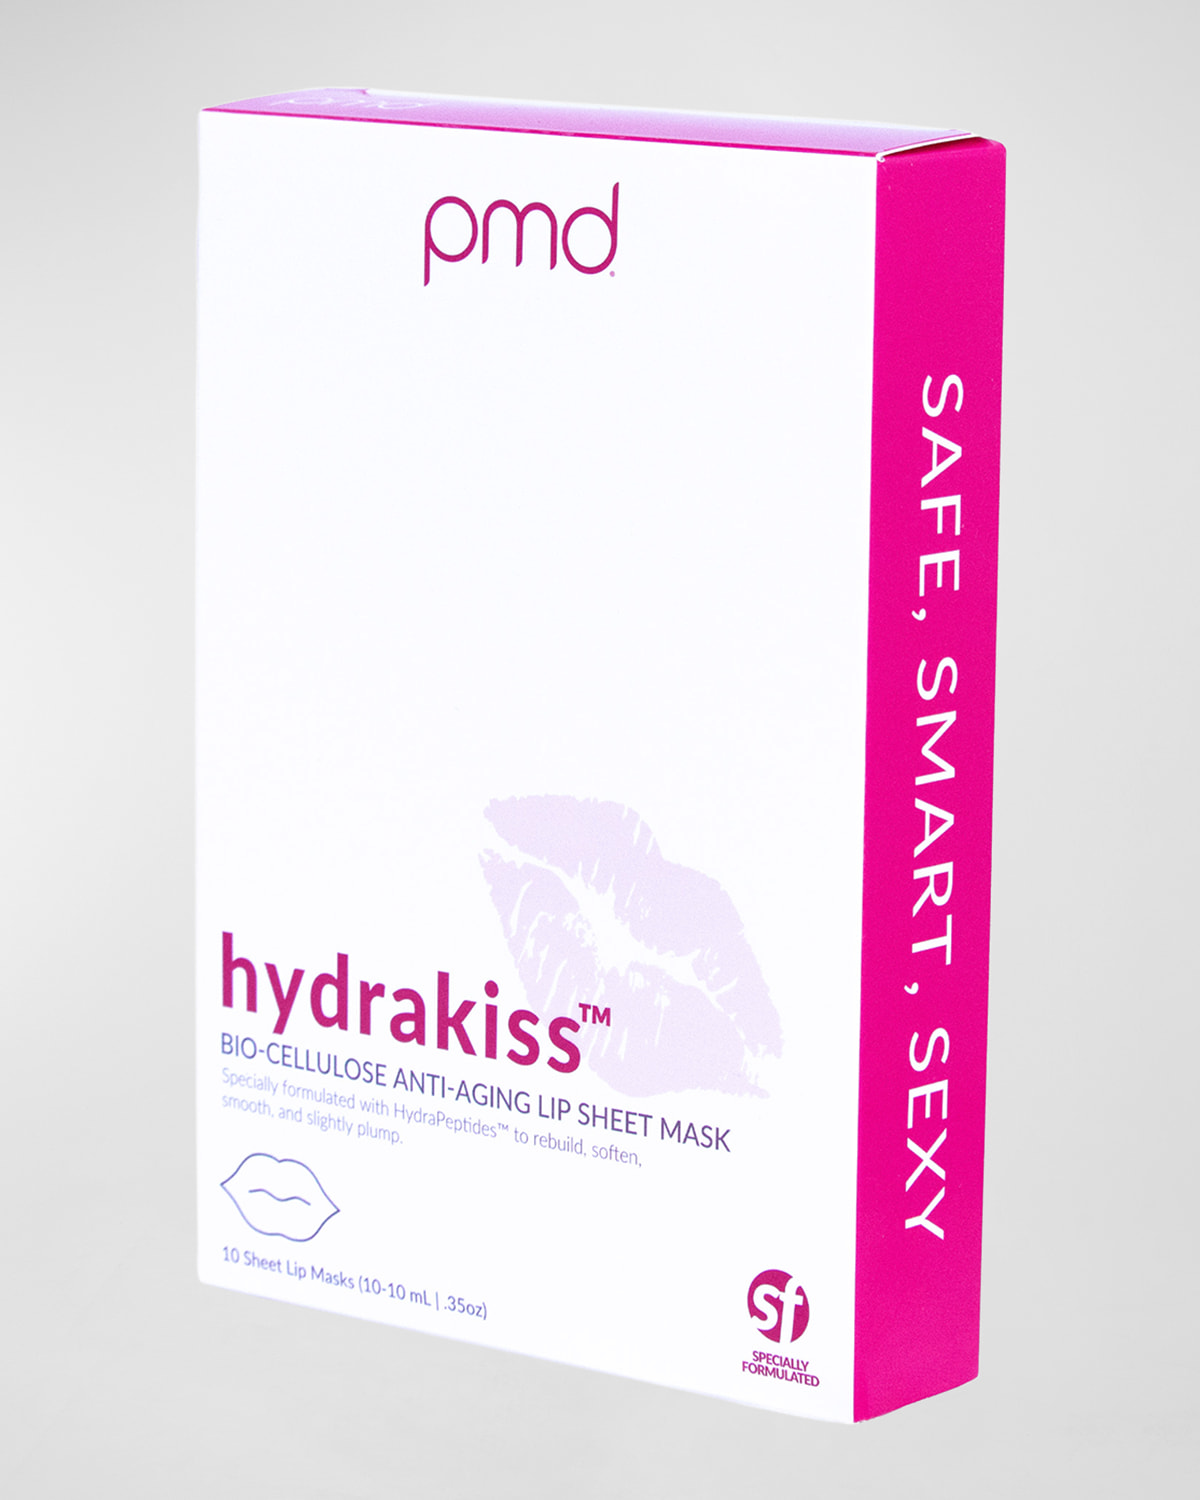 Hydrakiss Bio-Cellulose Anti-Aging Lip Sheet Masks, 10 Count